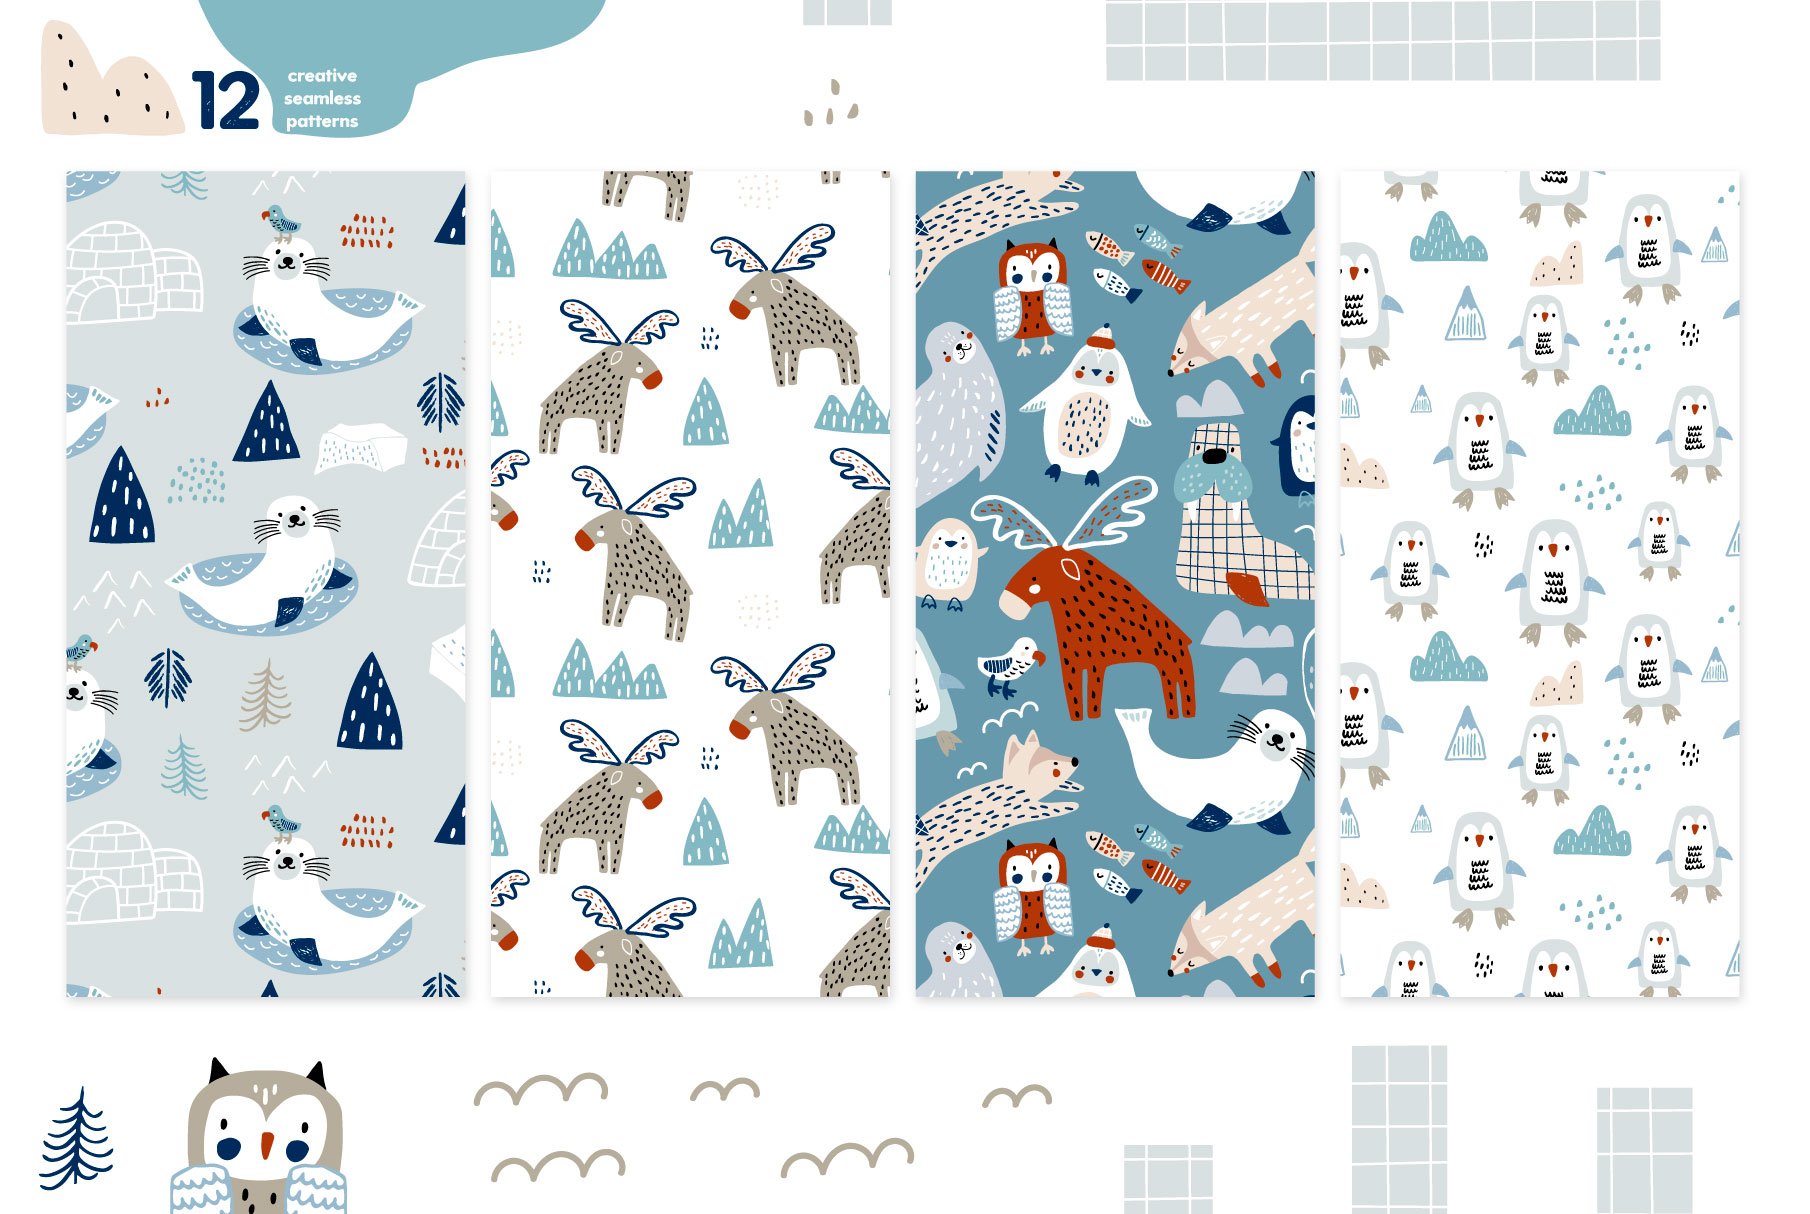 Contemporary patterns wit interesting polar animals.